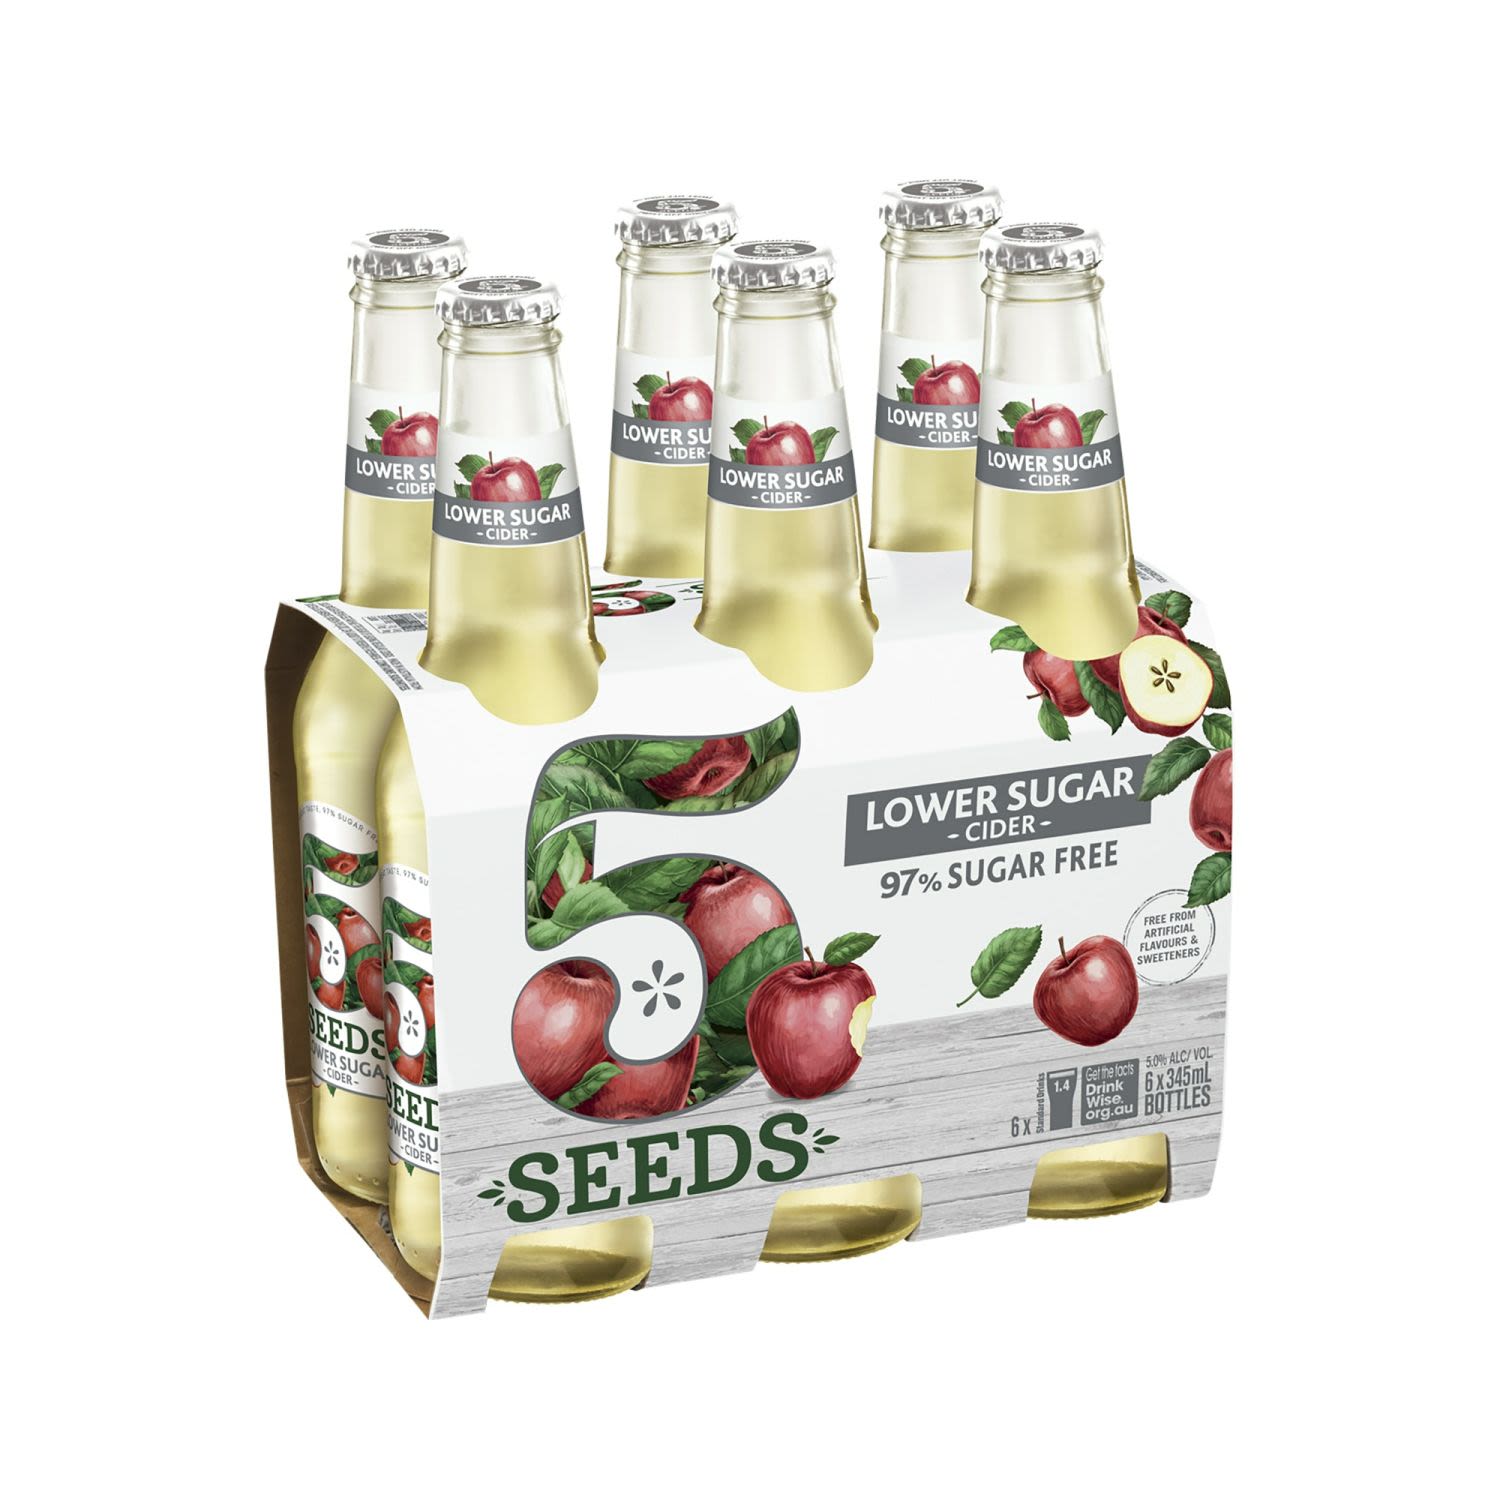 5 Seeds Lower Sugar Apple Cider 345mL 6 Pack